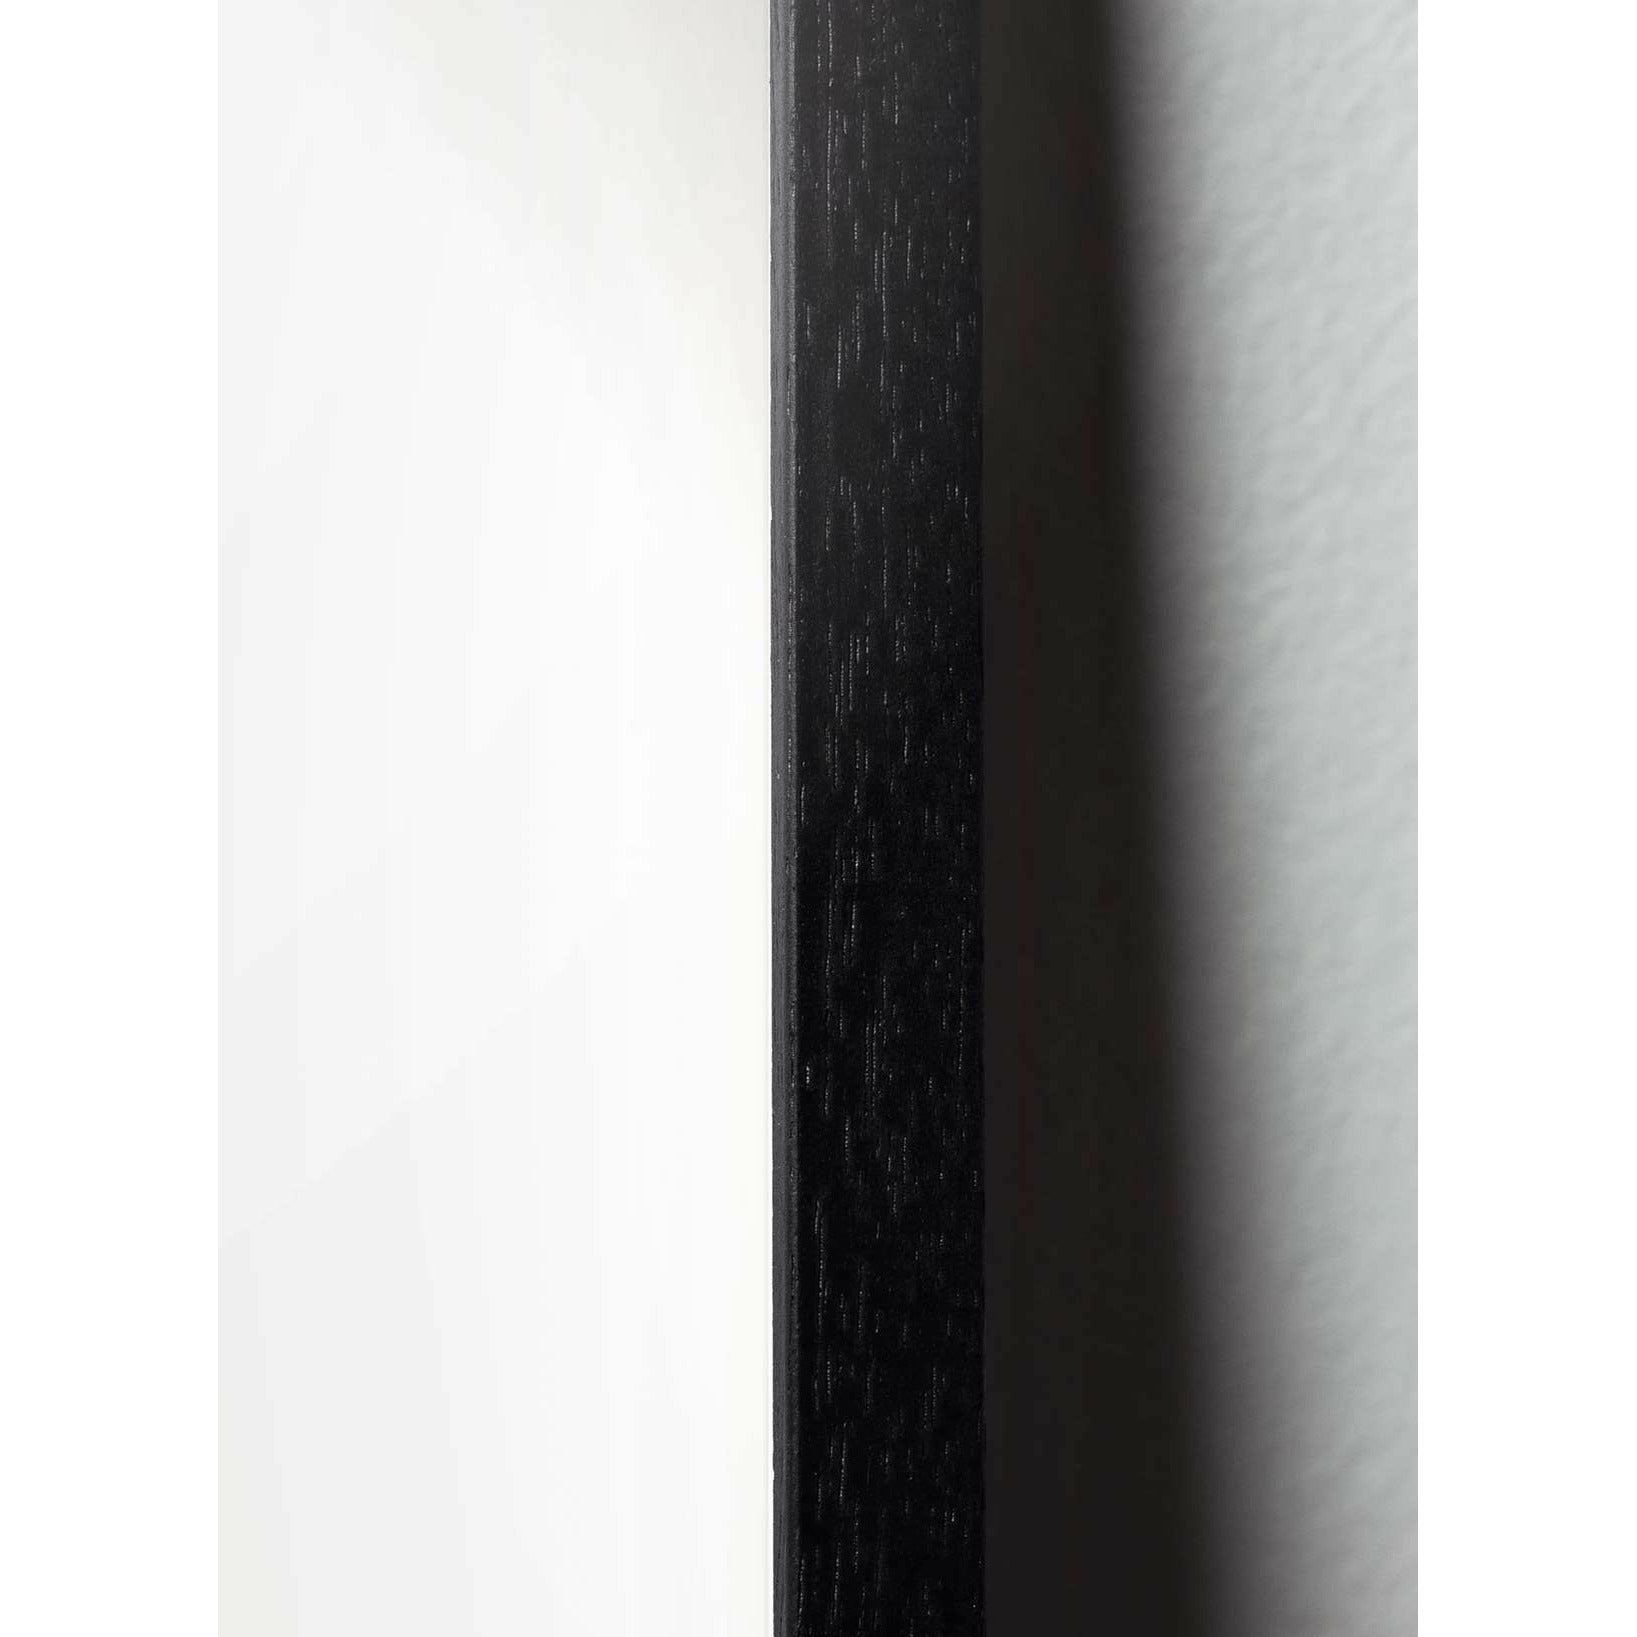 Brainchild Egg Cross Format Poster, Frame In Black Lacquered Wood A5, Black